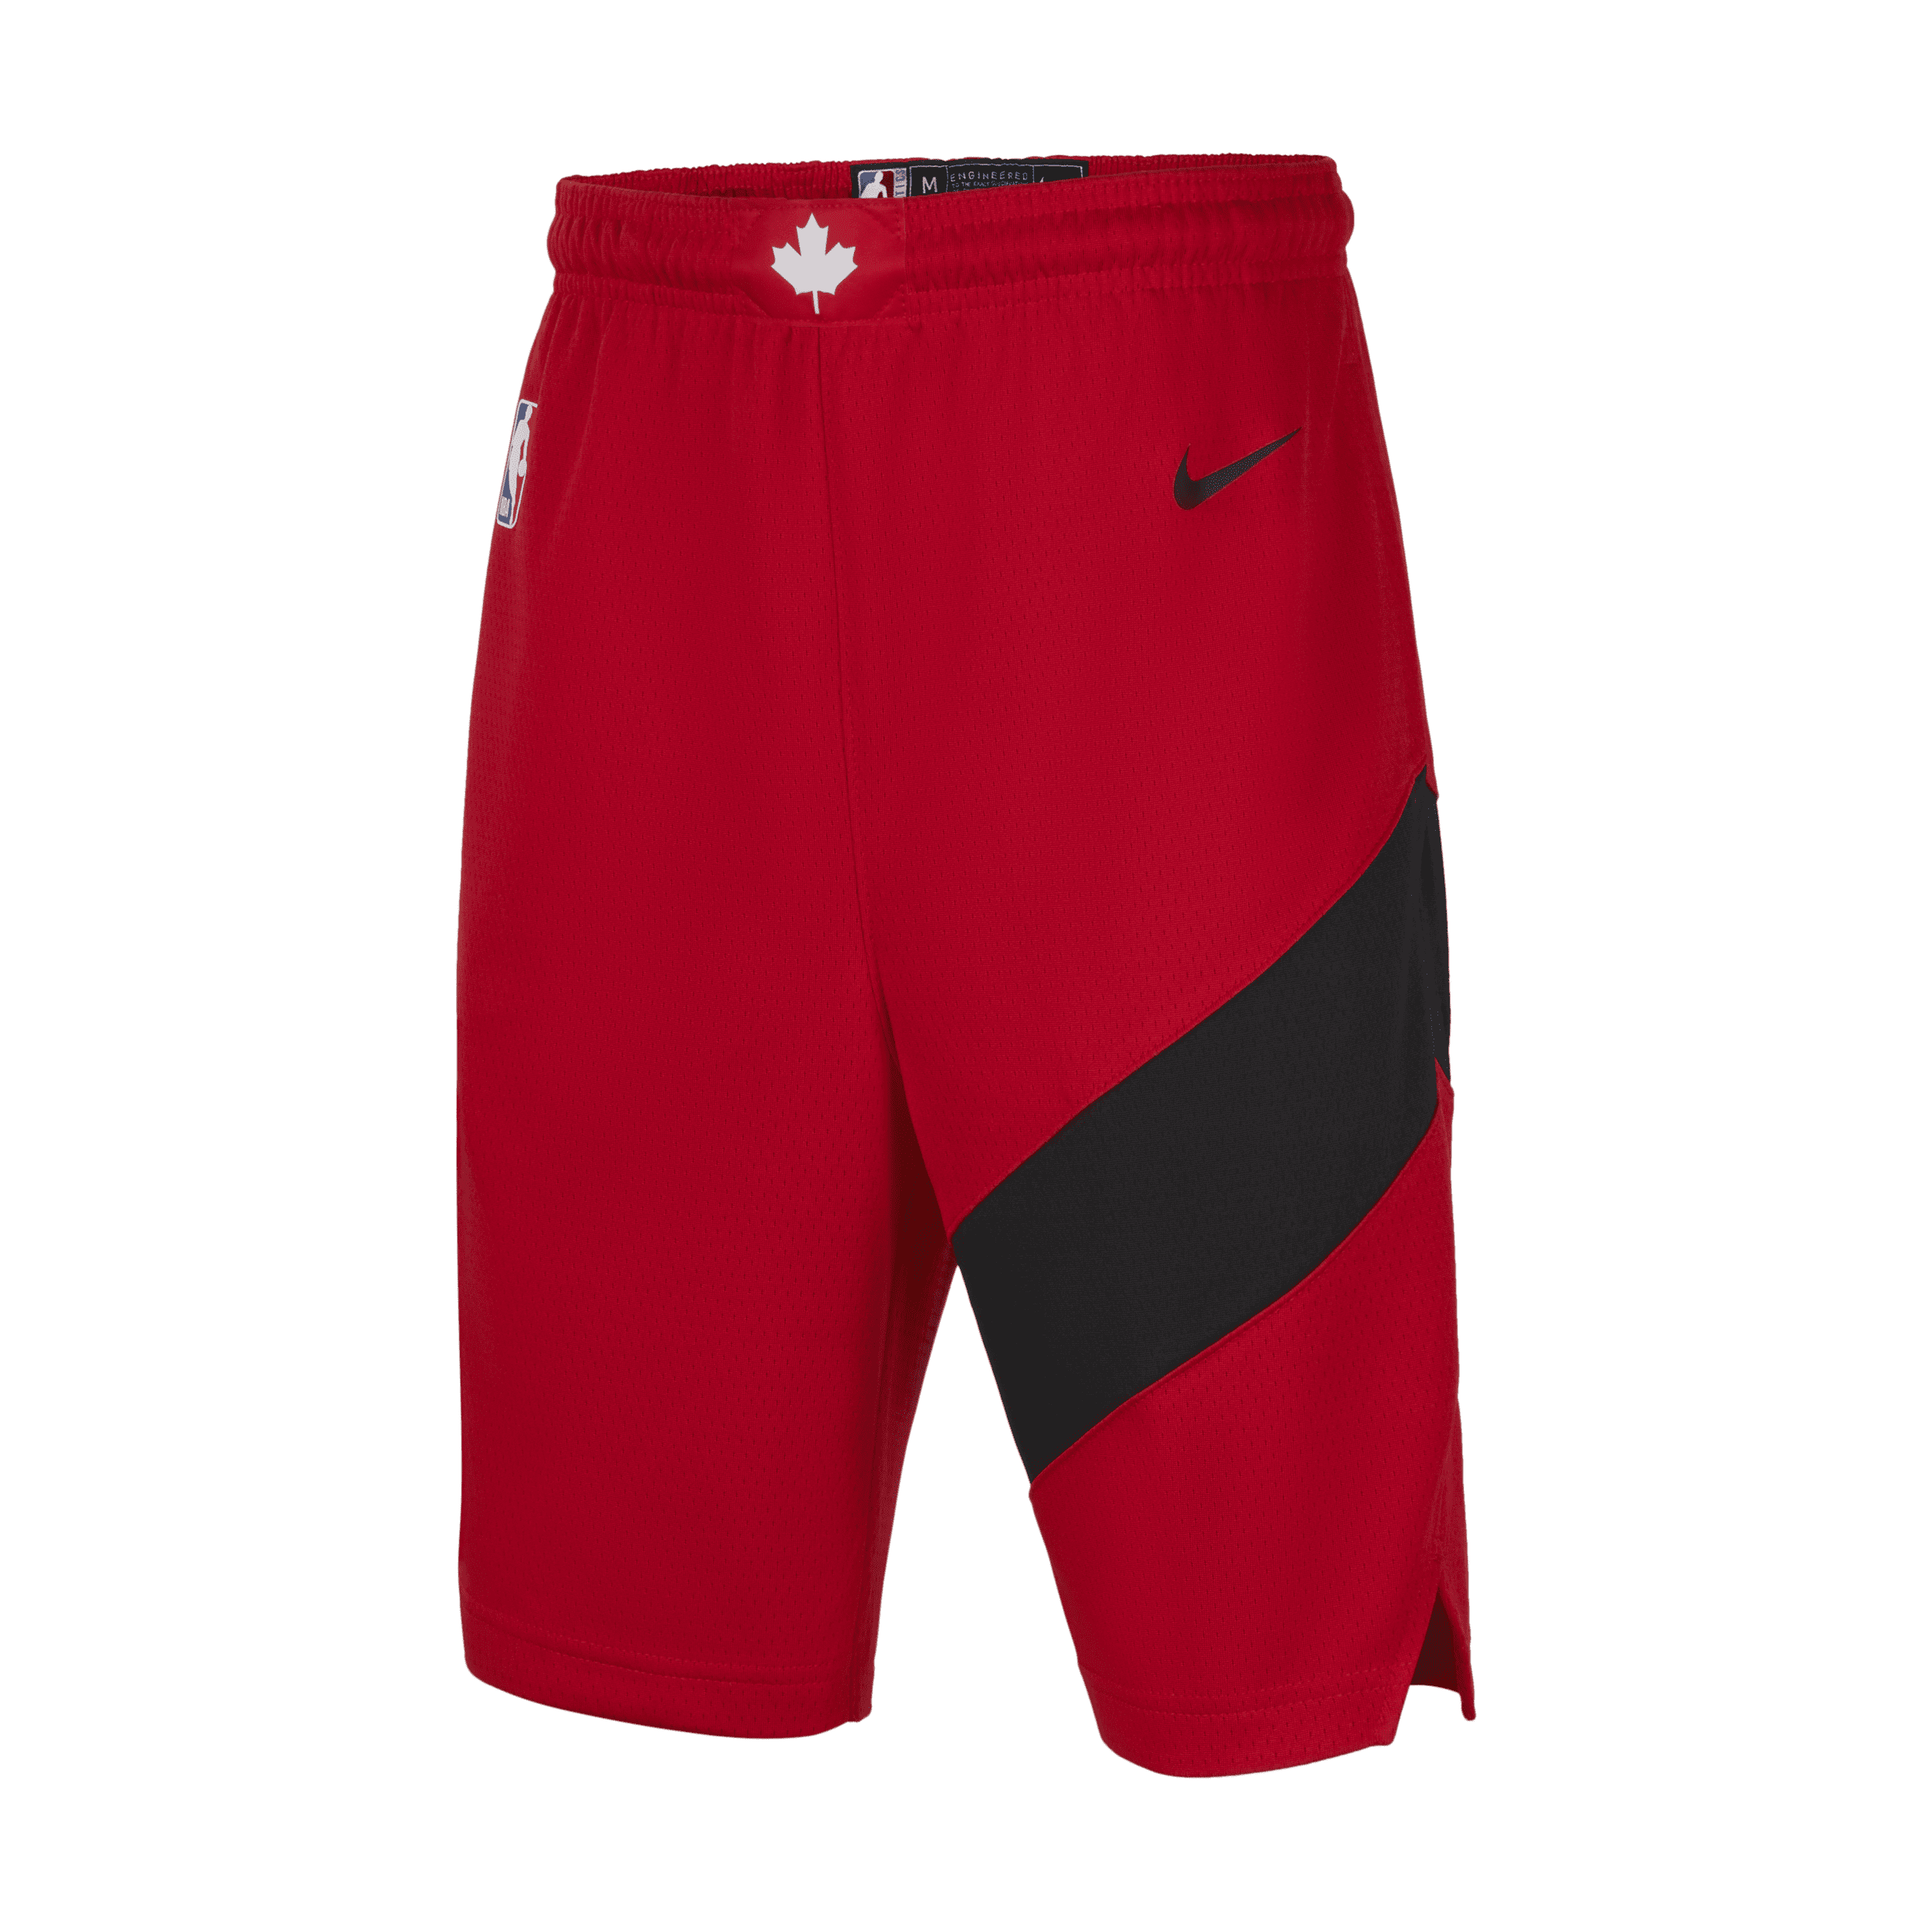 Shorts Toronto Raptors Swingman Nike NBA - Ragazzi - Rosso